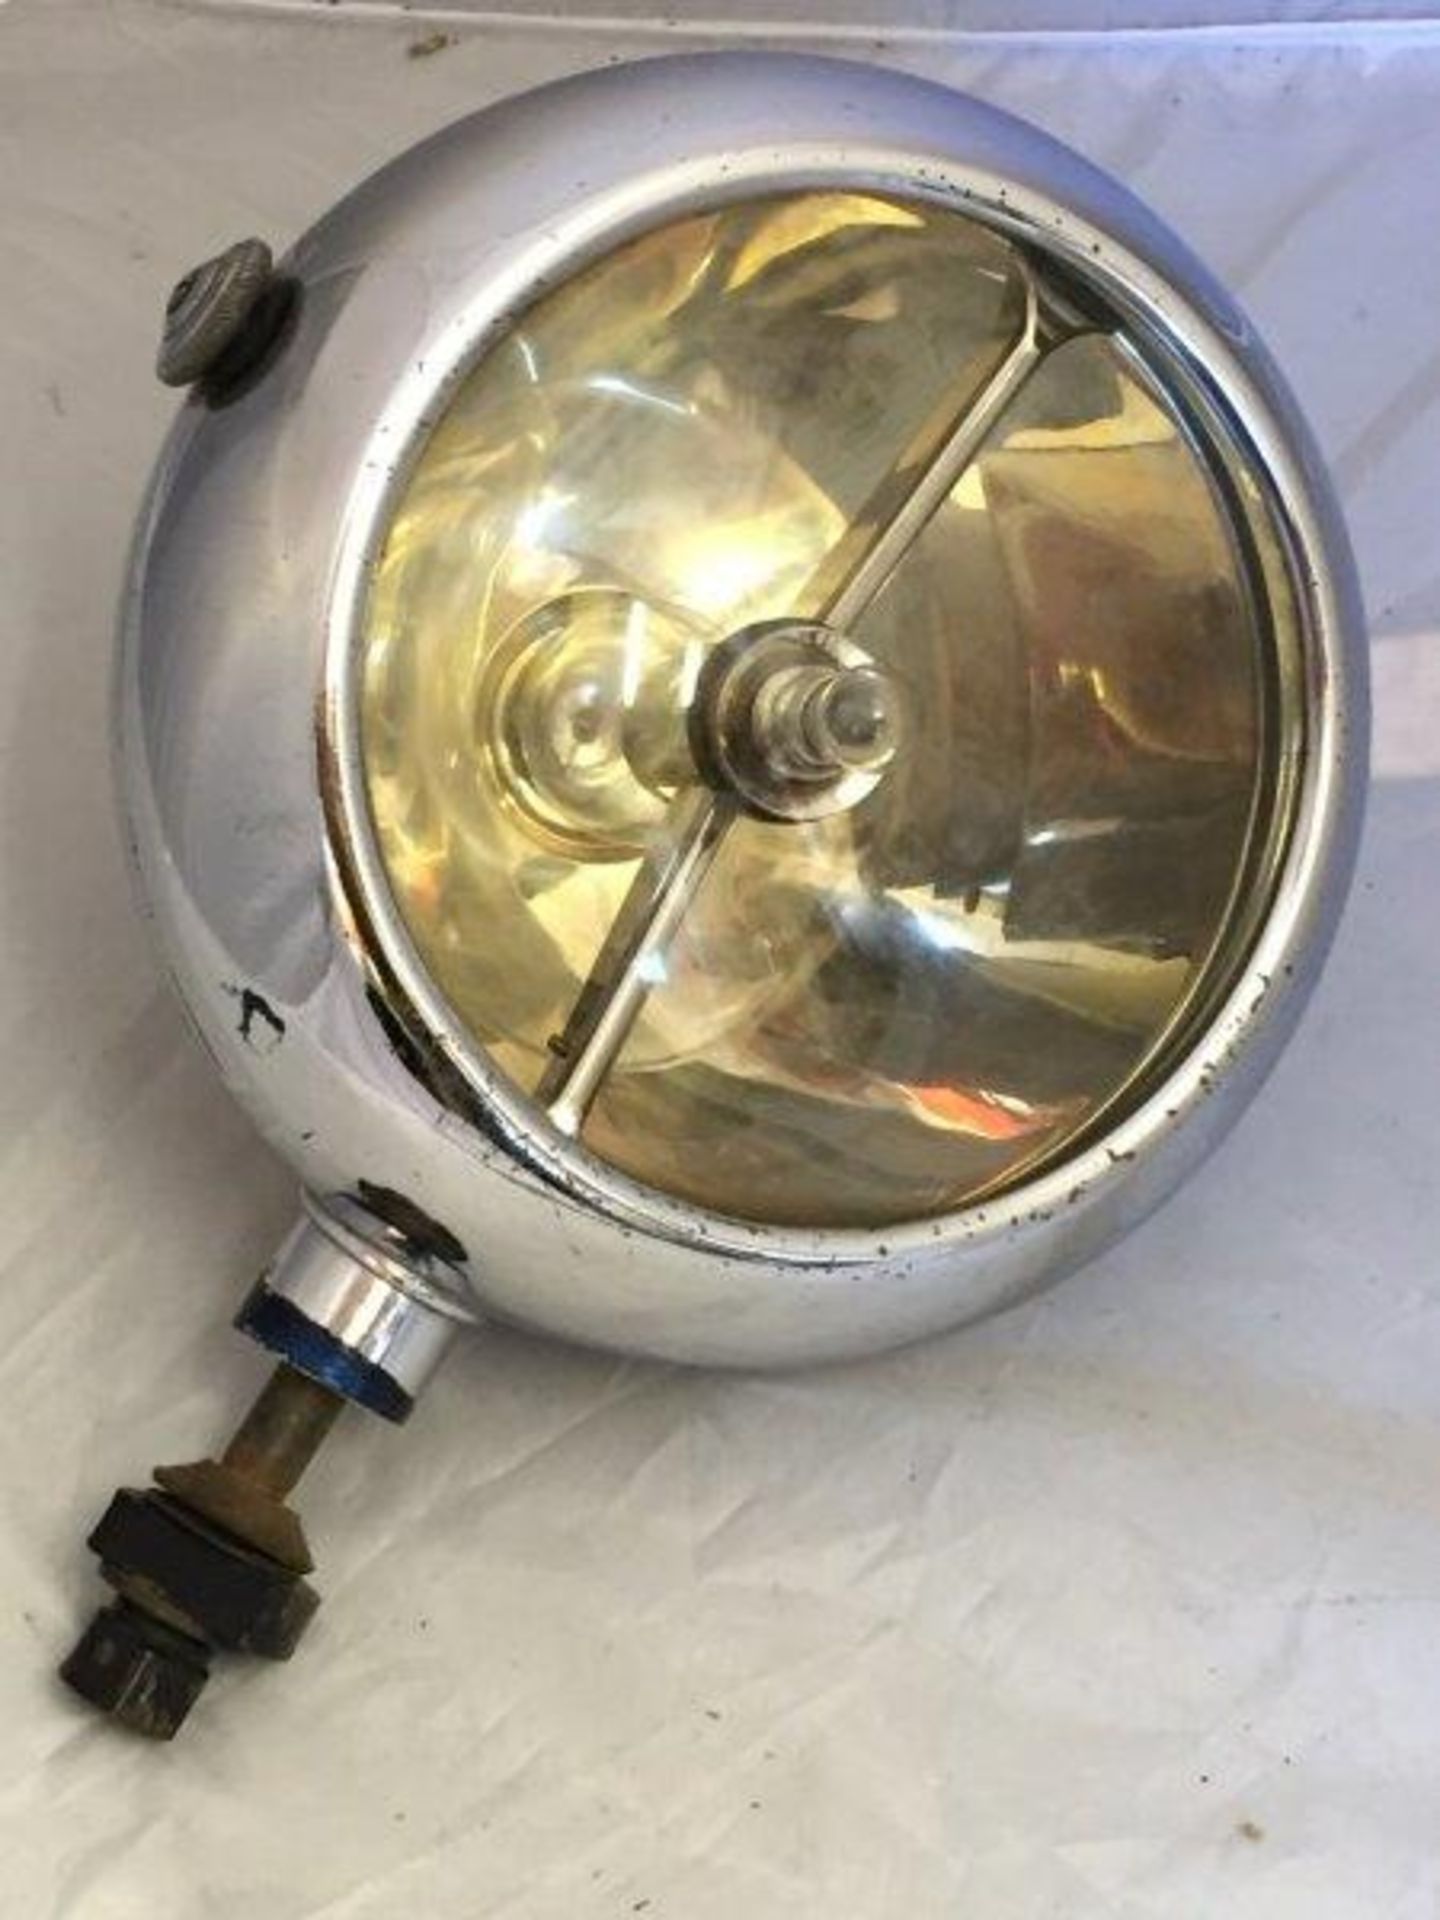 A Phares Auteroche chrome plated spotlamp in good original condition.